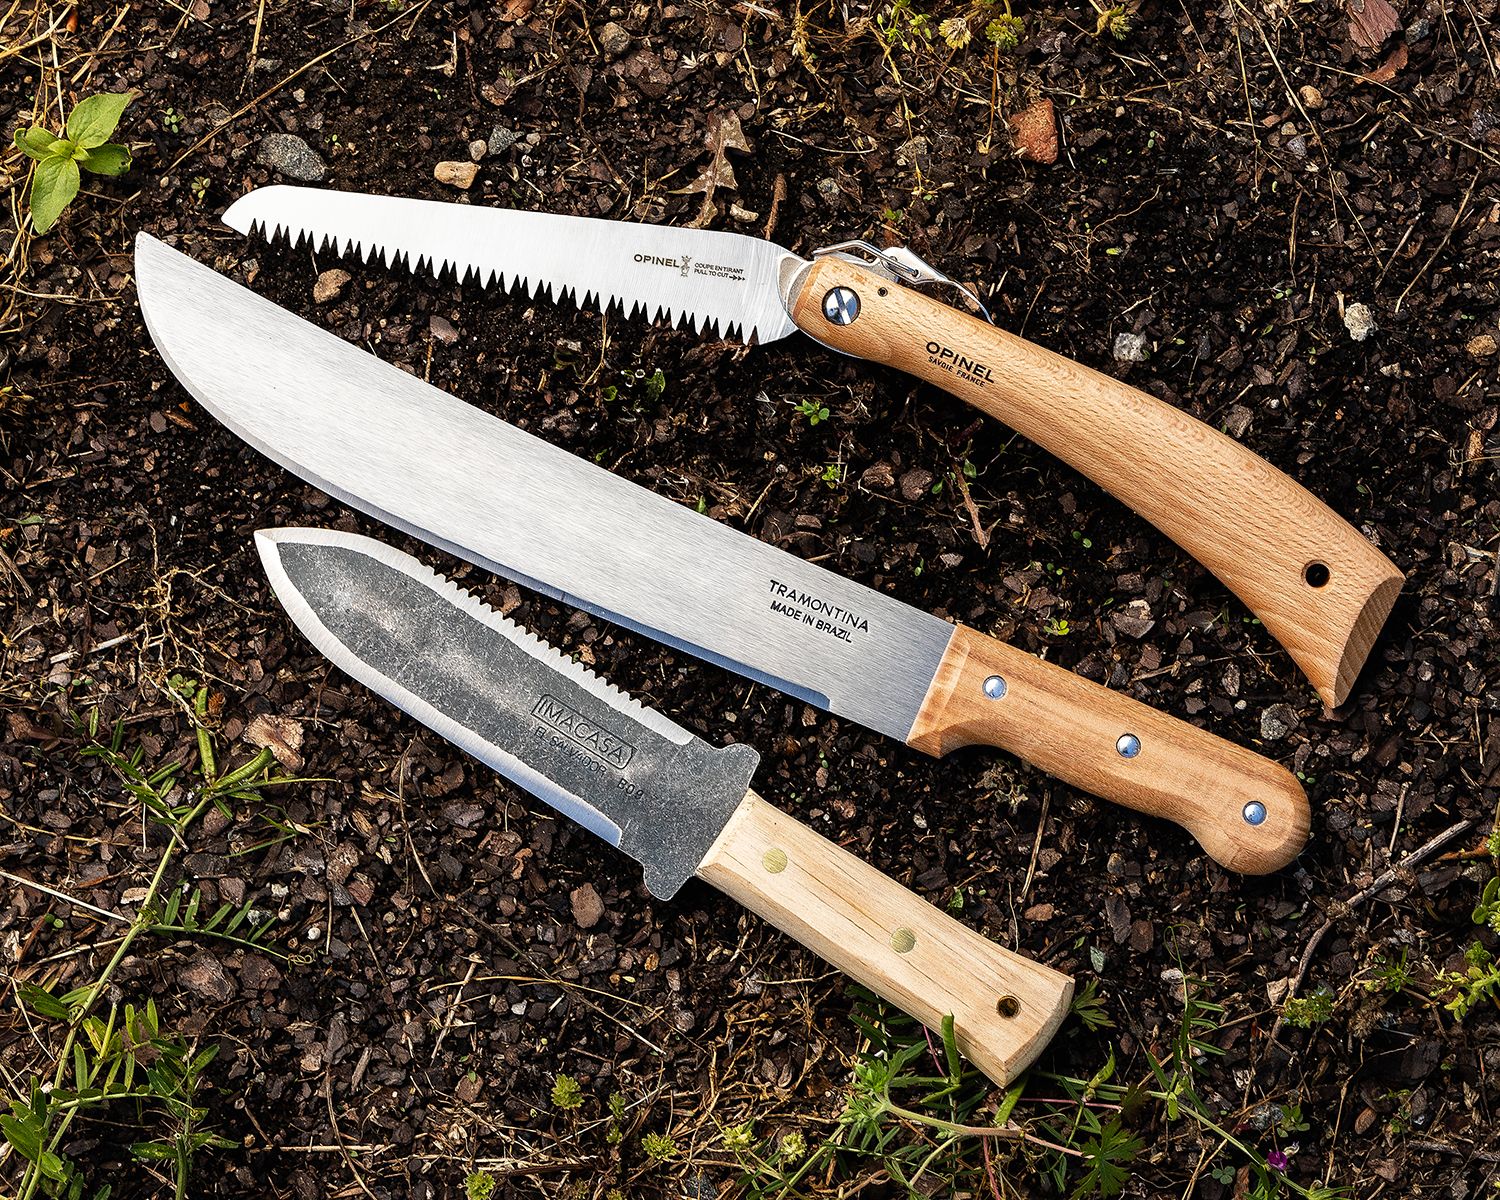 Tramontina Machete Fixed Blade Knife Wood (12) - Blade HQ